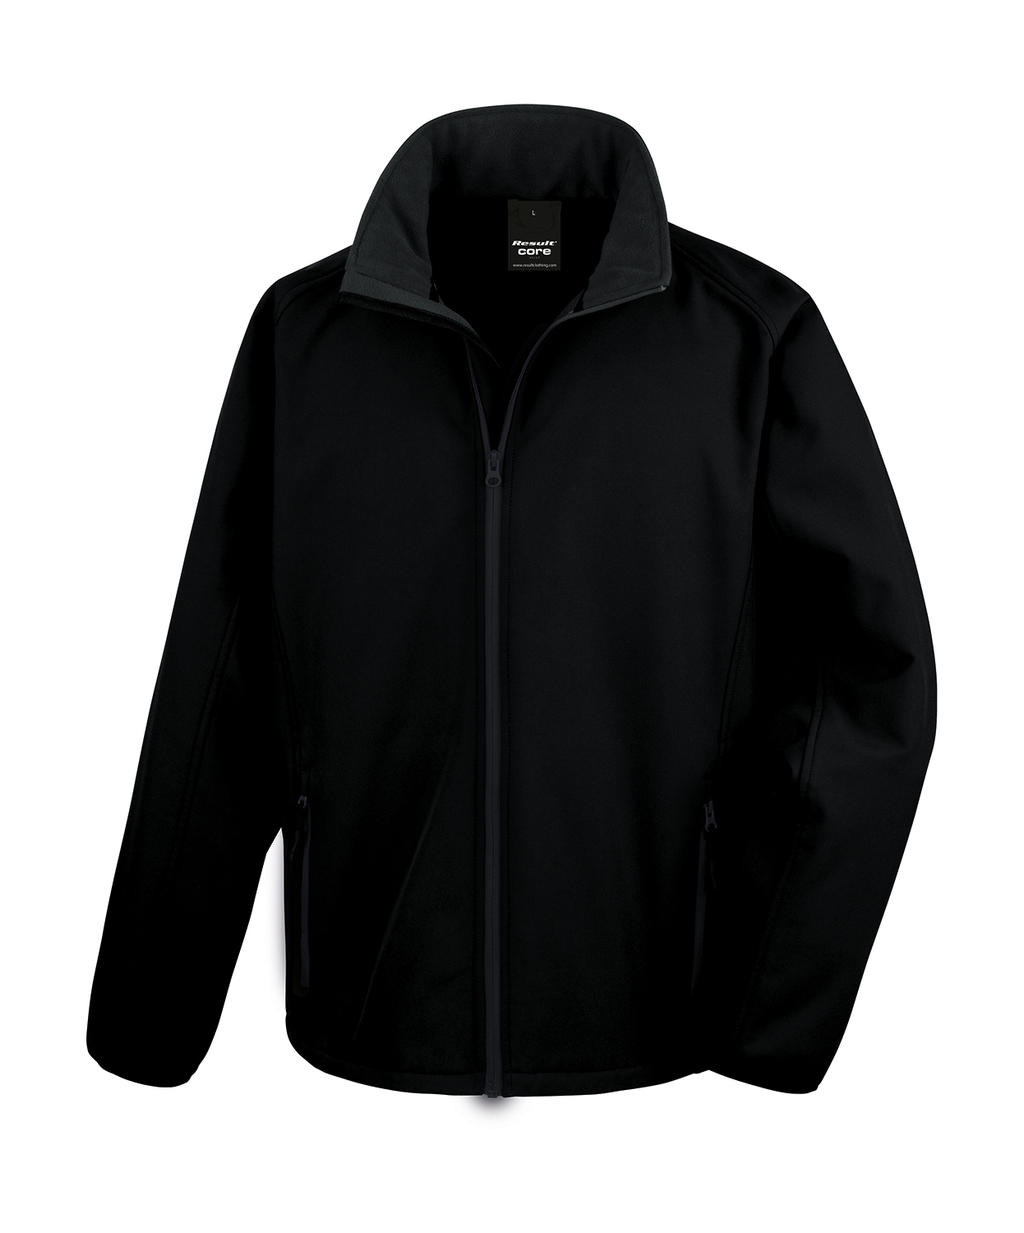  Printable Softshell Jacket in Farbe Black/Black